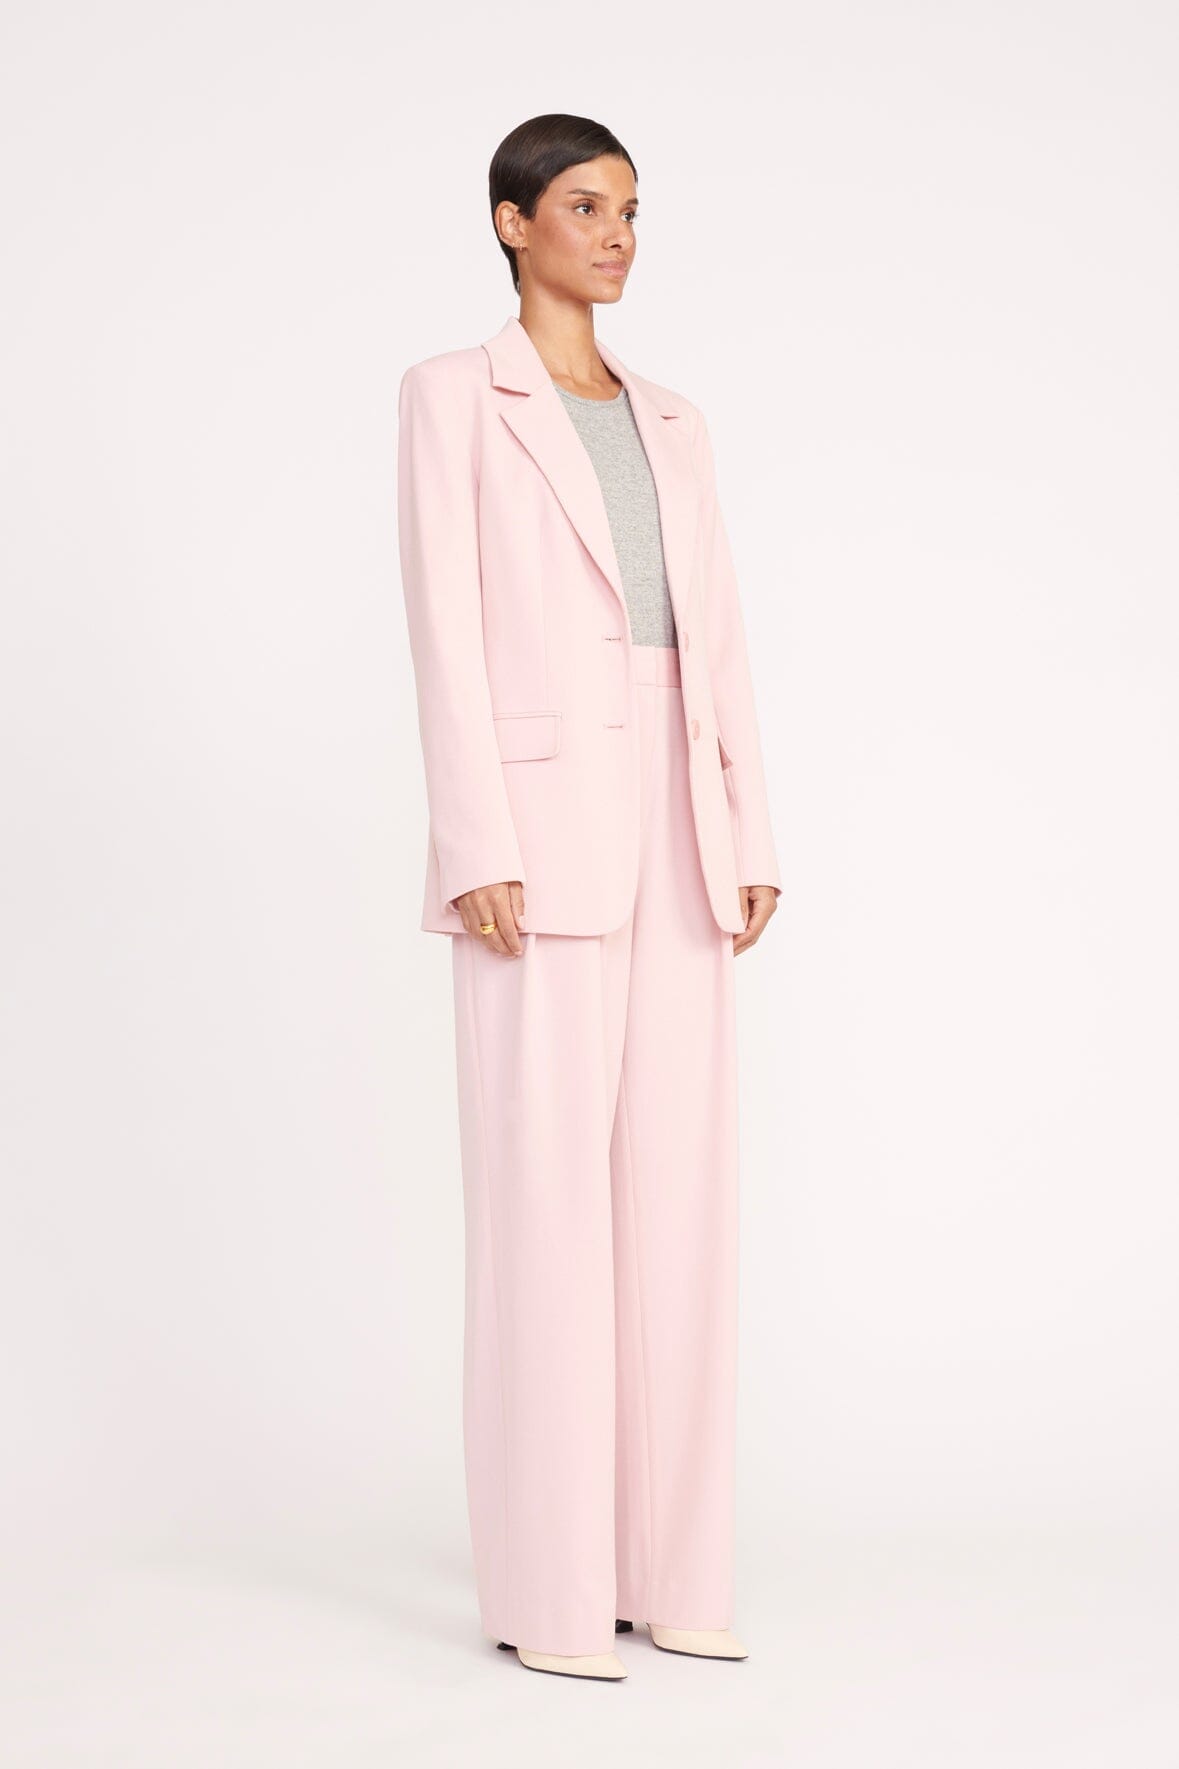 Light Pink Blazer Trouser Suit Set for Women, Pink Pantsuit With Oversized  Blazer and Wide Leg Pants, Light Pink Women's Business Suit -  Singapore